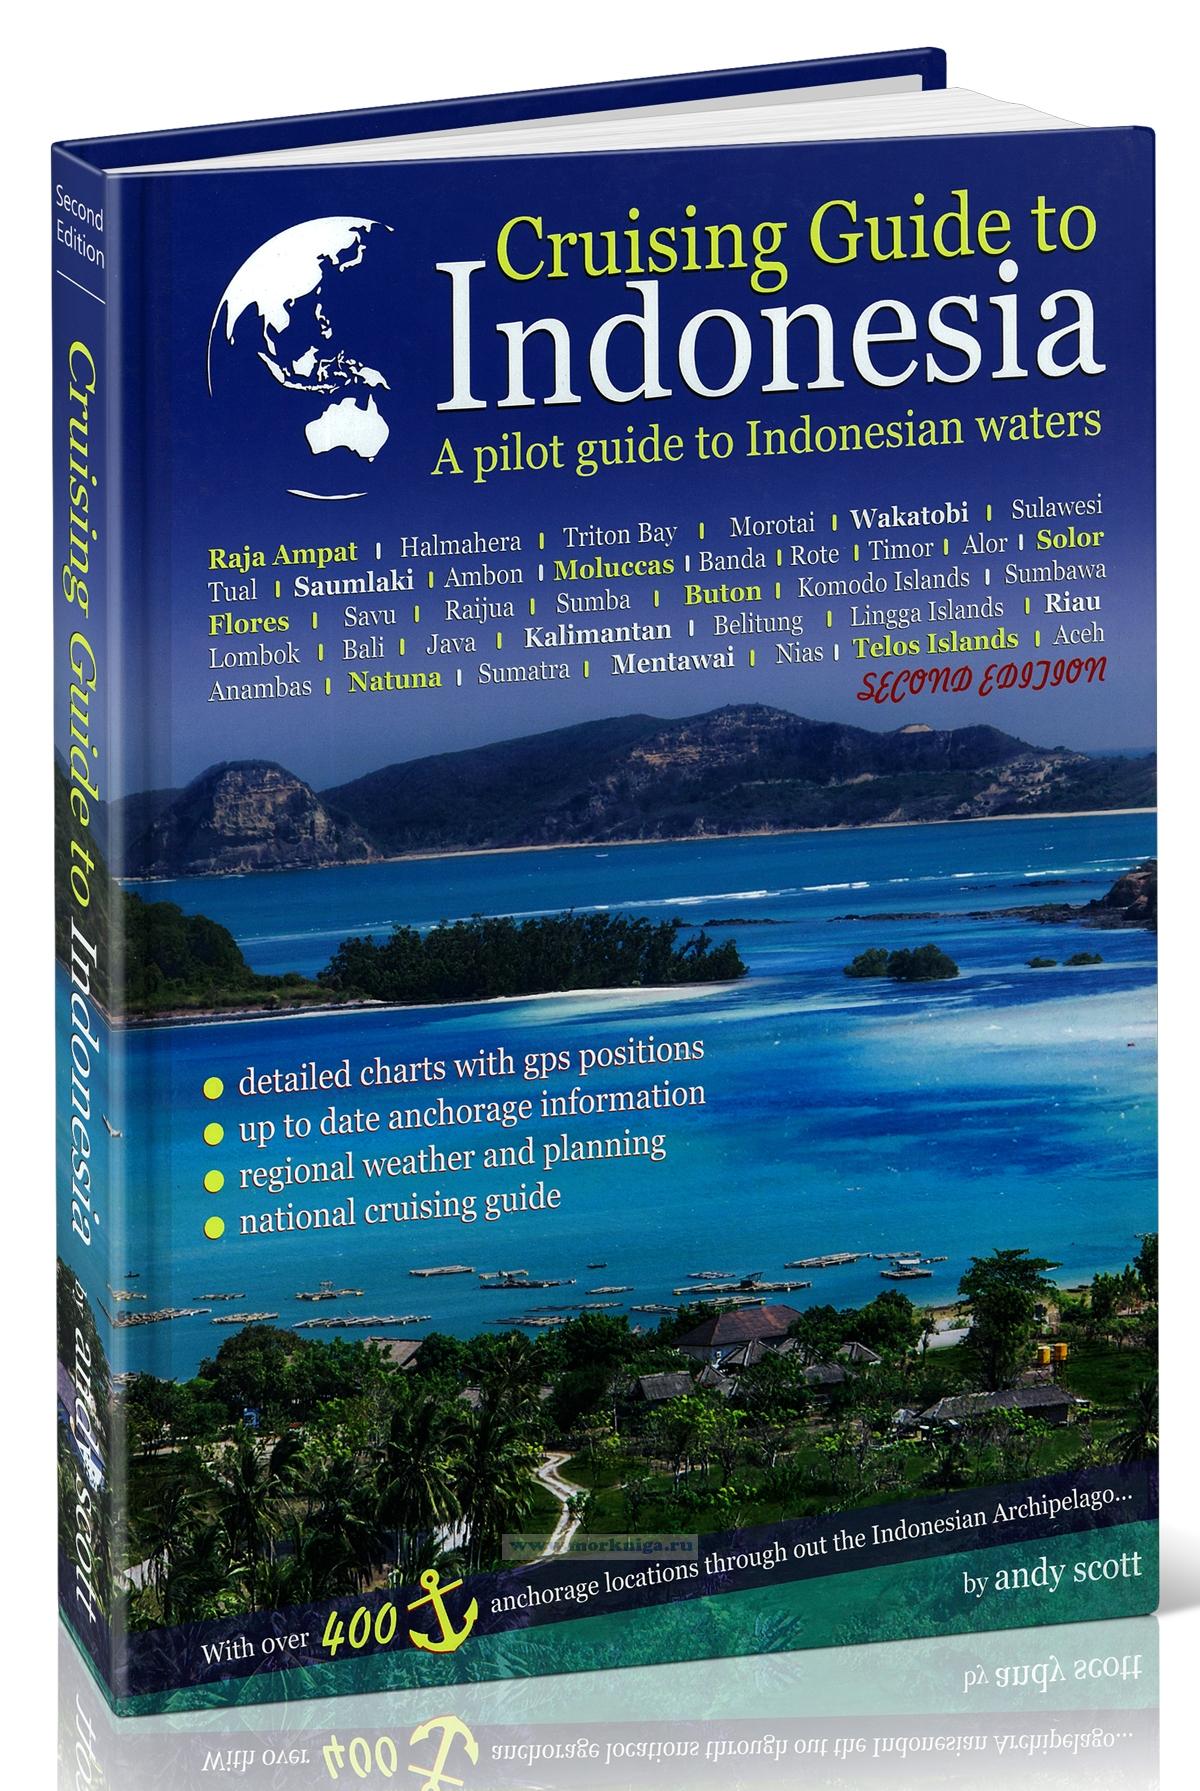 Cruising Guide to Indonesia. A pilot guide to Indonesian waters. Круизный гид по Индонезии. Руководство по плаванию в индонезийских водах